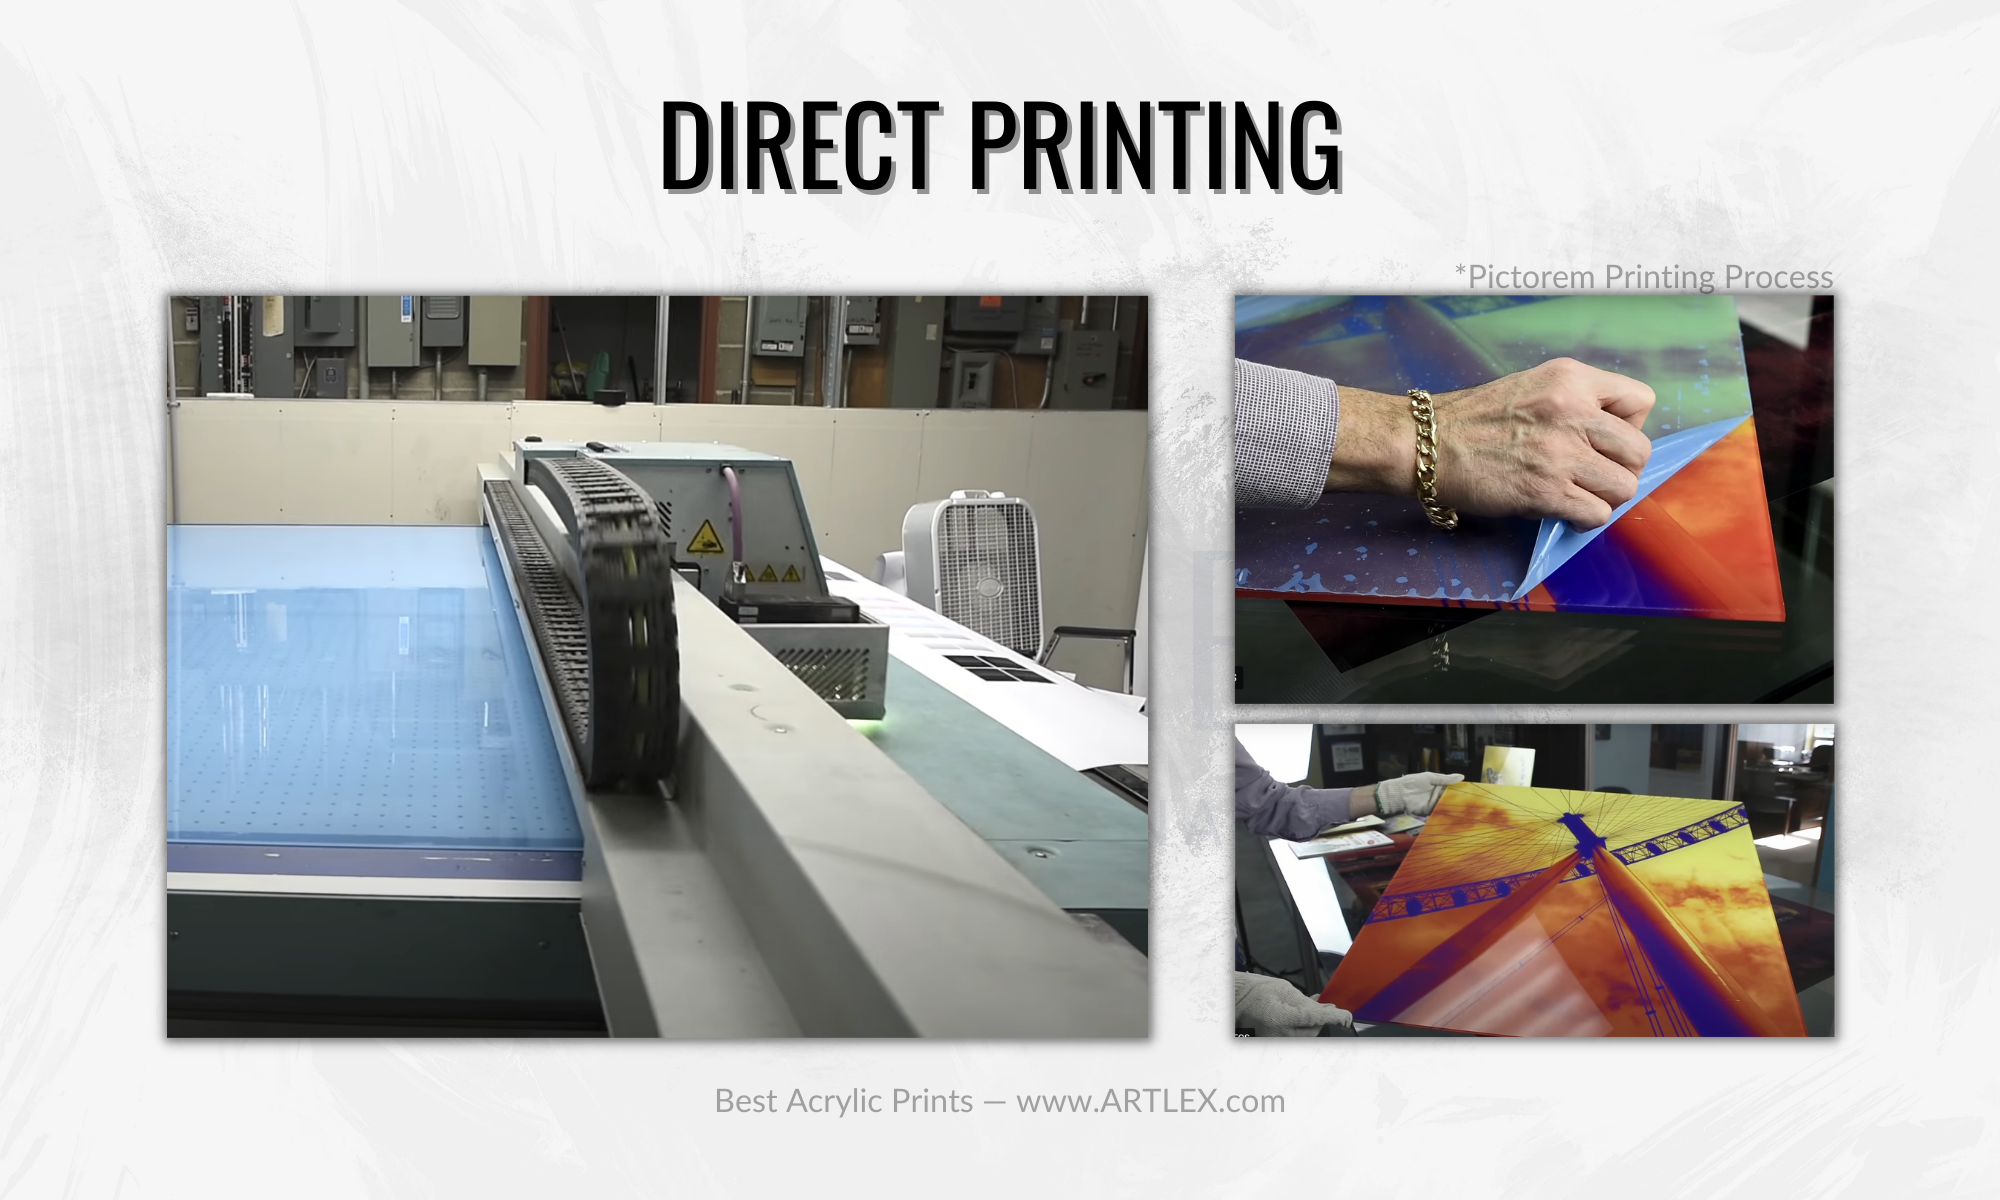 Direct Printing Acrylic Prints